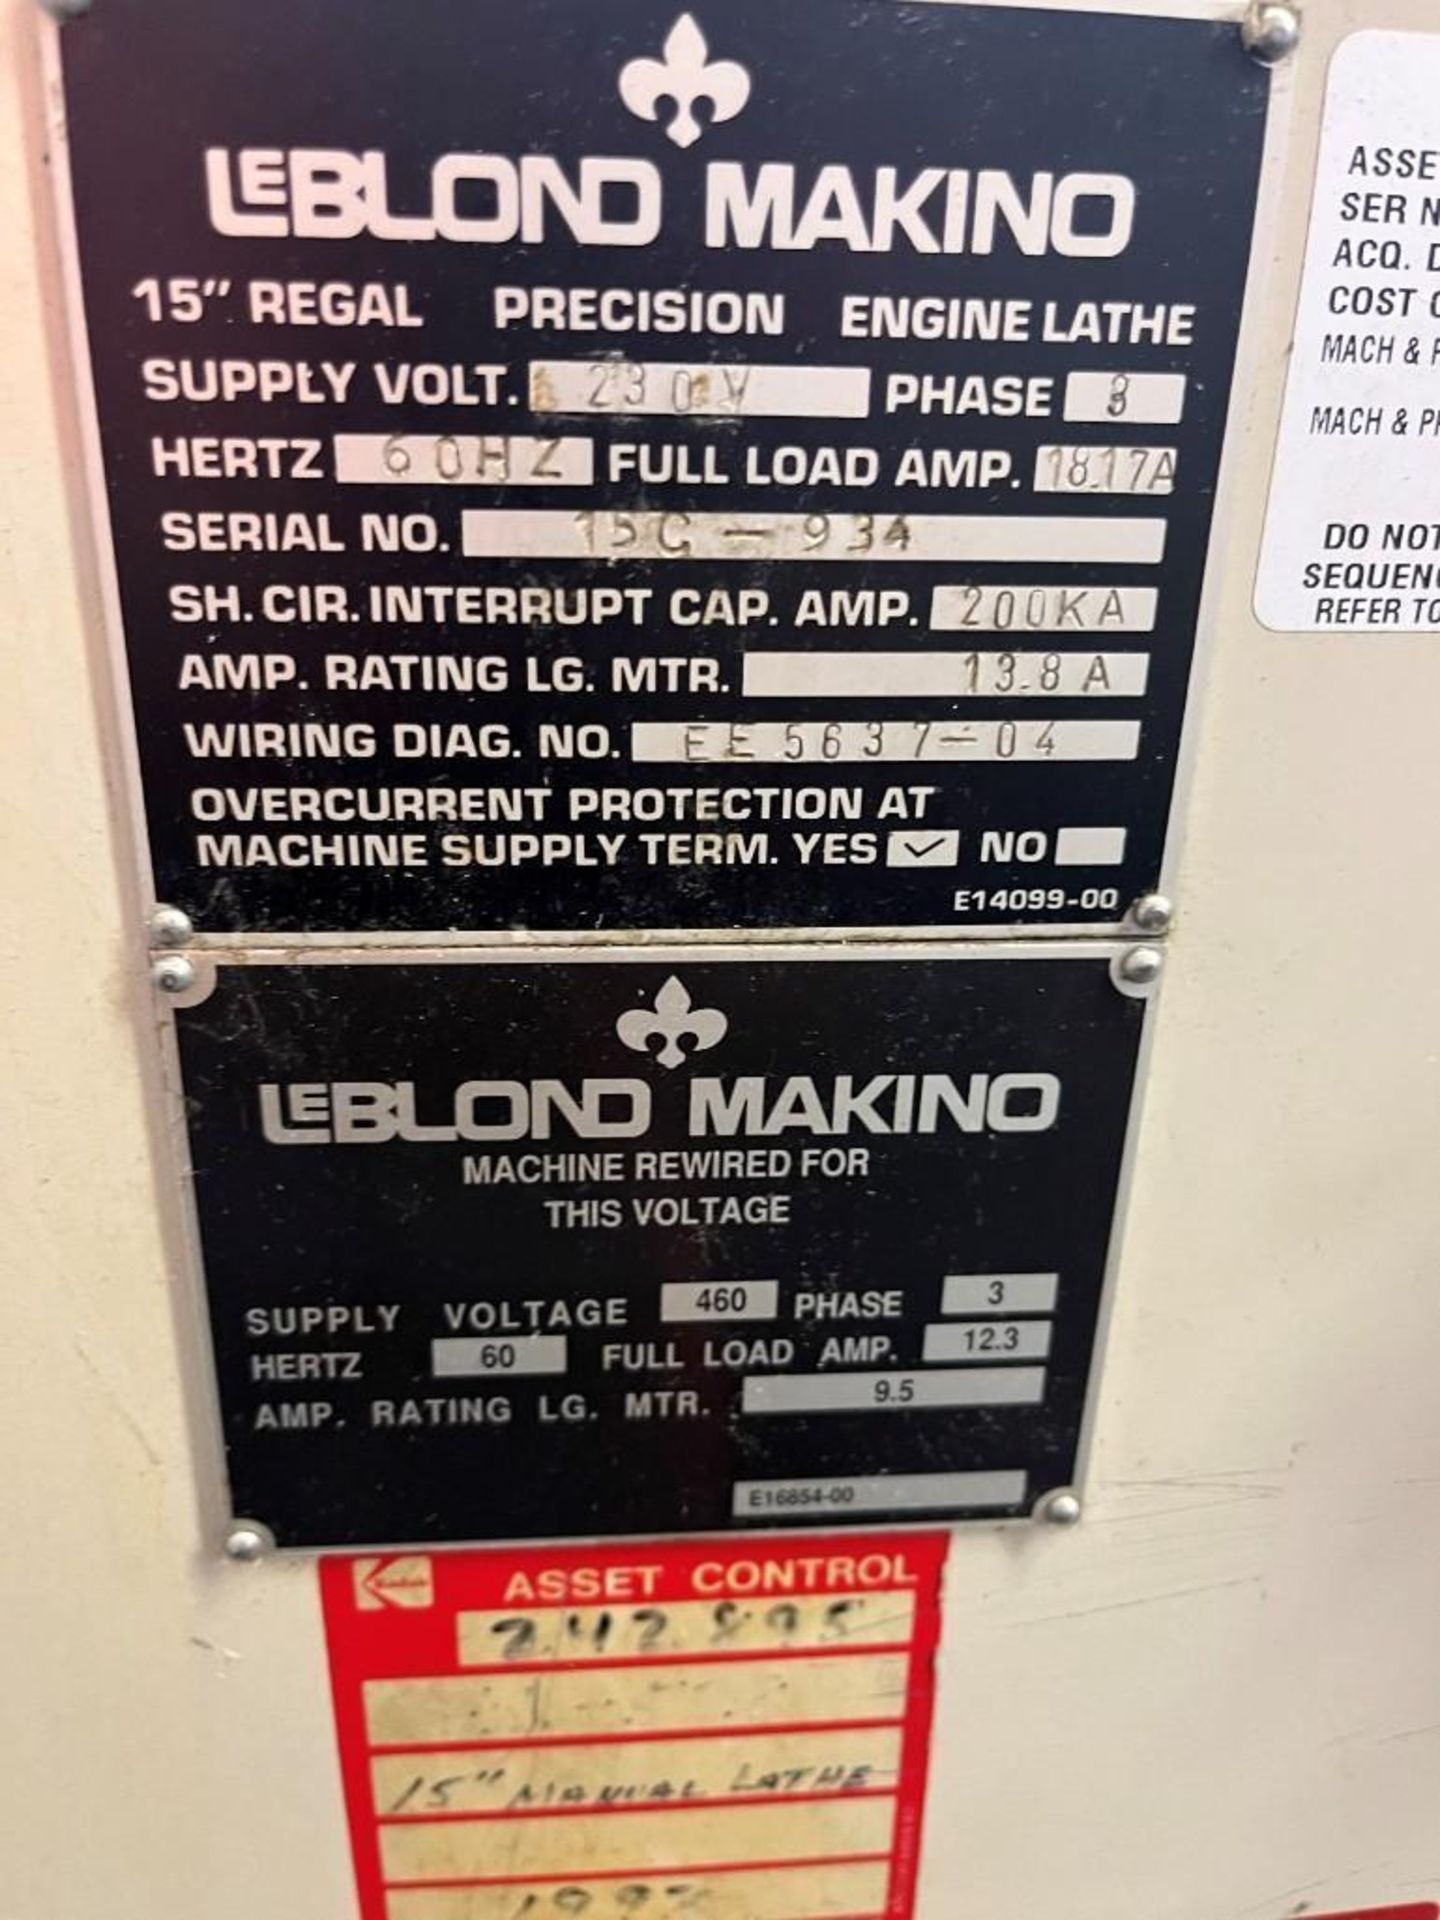 LeBlond Makino Regal Servo Shift 15" Engine Lathe - Image 6 of 6